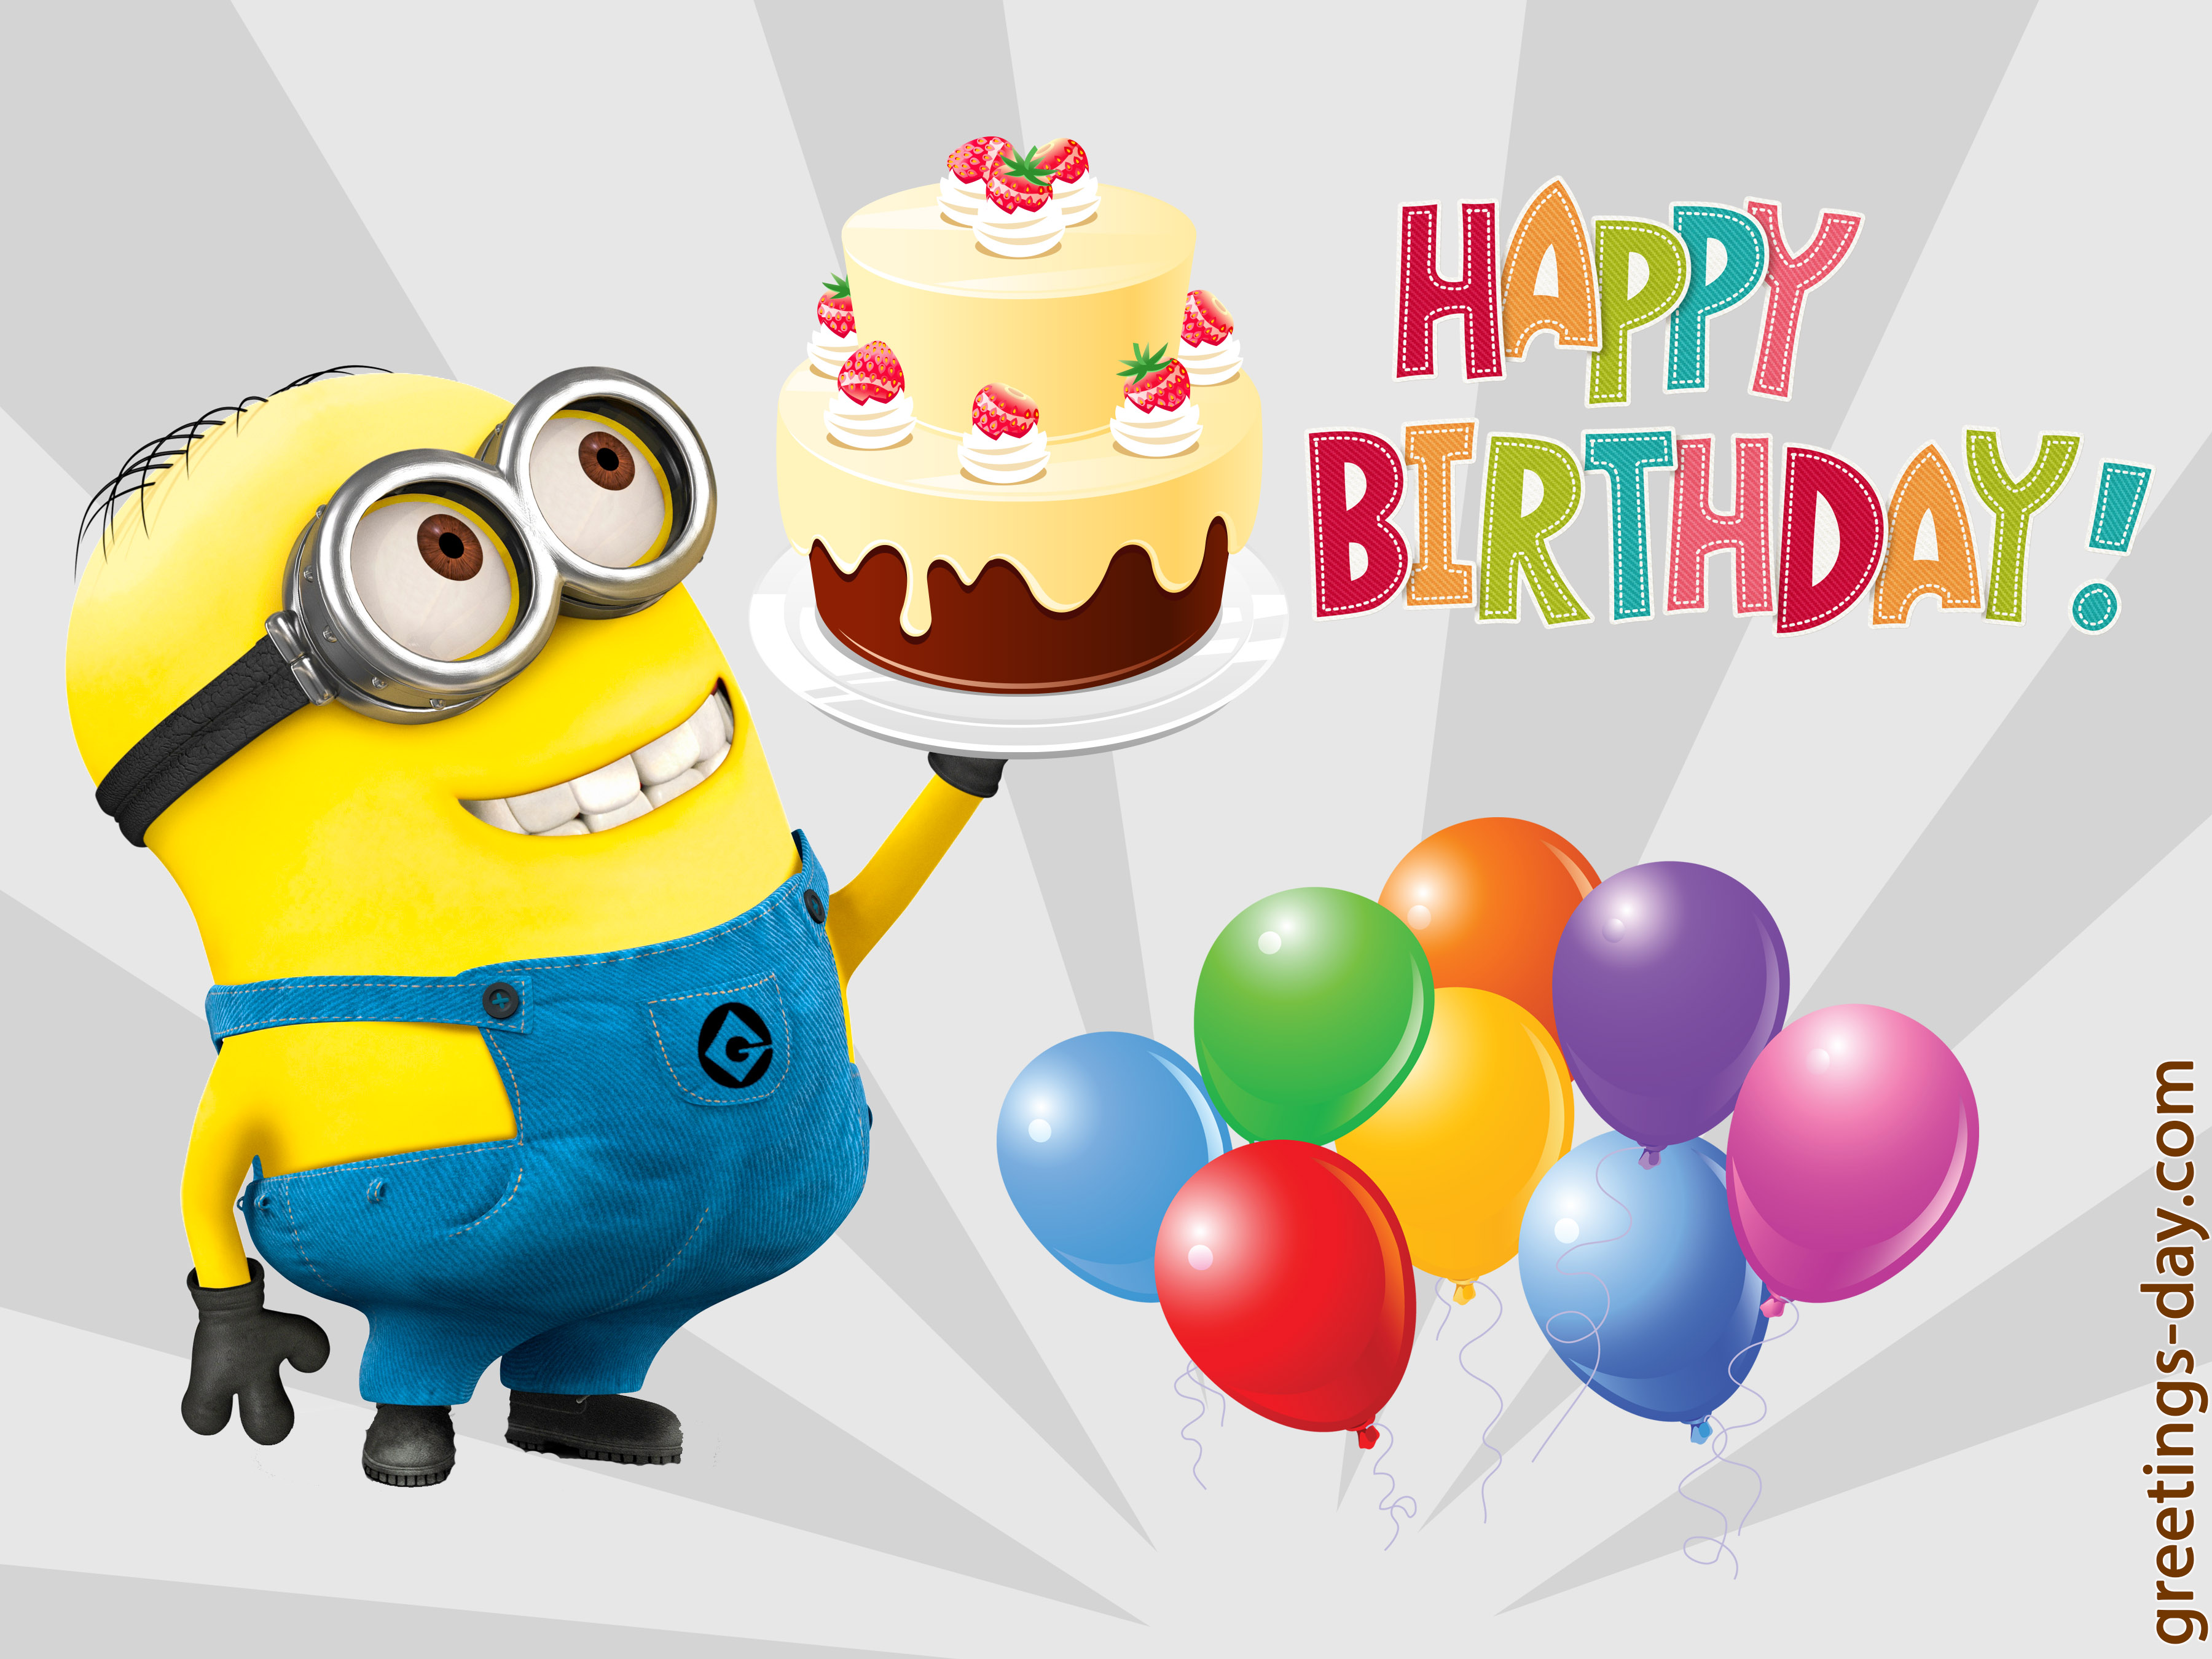 Happy-Birthday-card-minion1.jpg